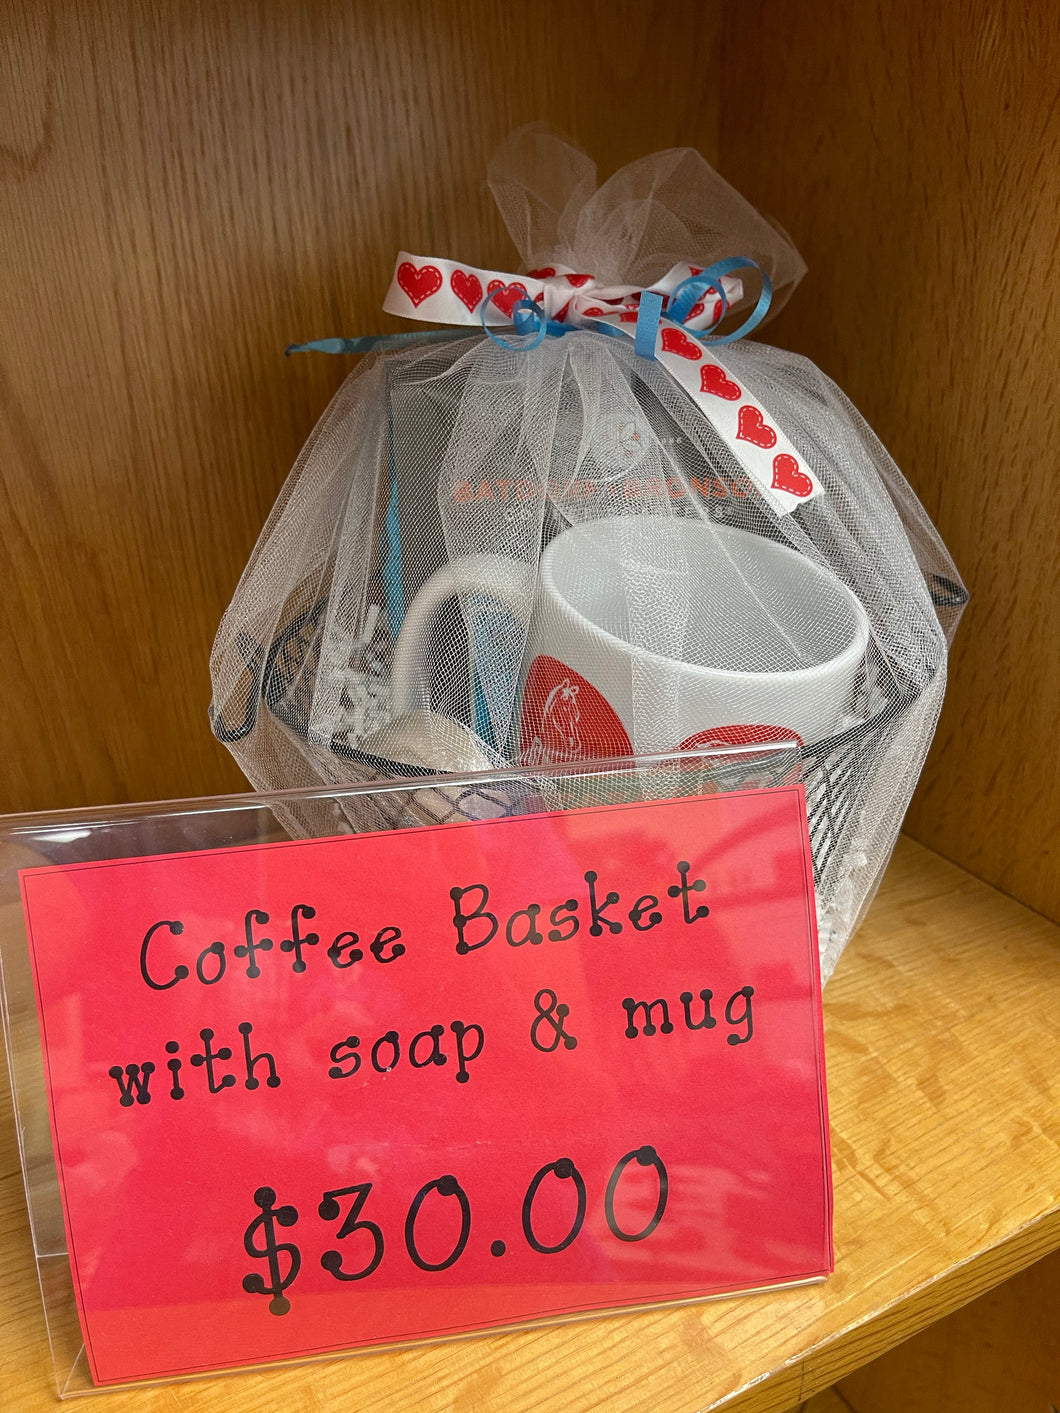 Coffee Basket with soap & mug